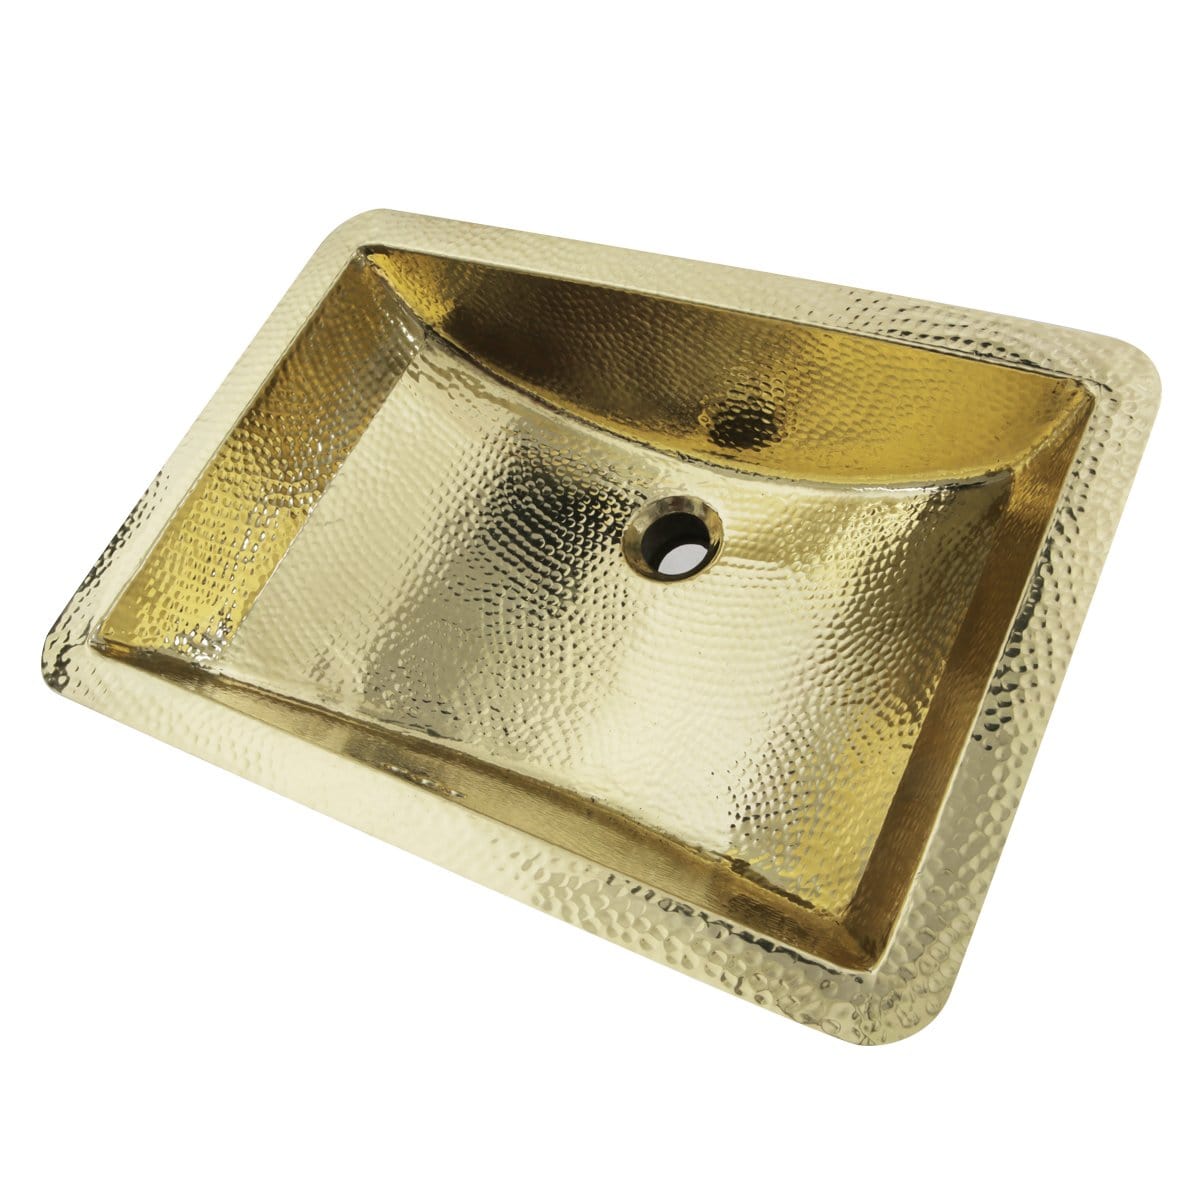 Nantucket 21" Hand Hammered Brass Rectangle Undermount Bathroom Sink with Overflow - TRB-1914-OF